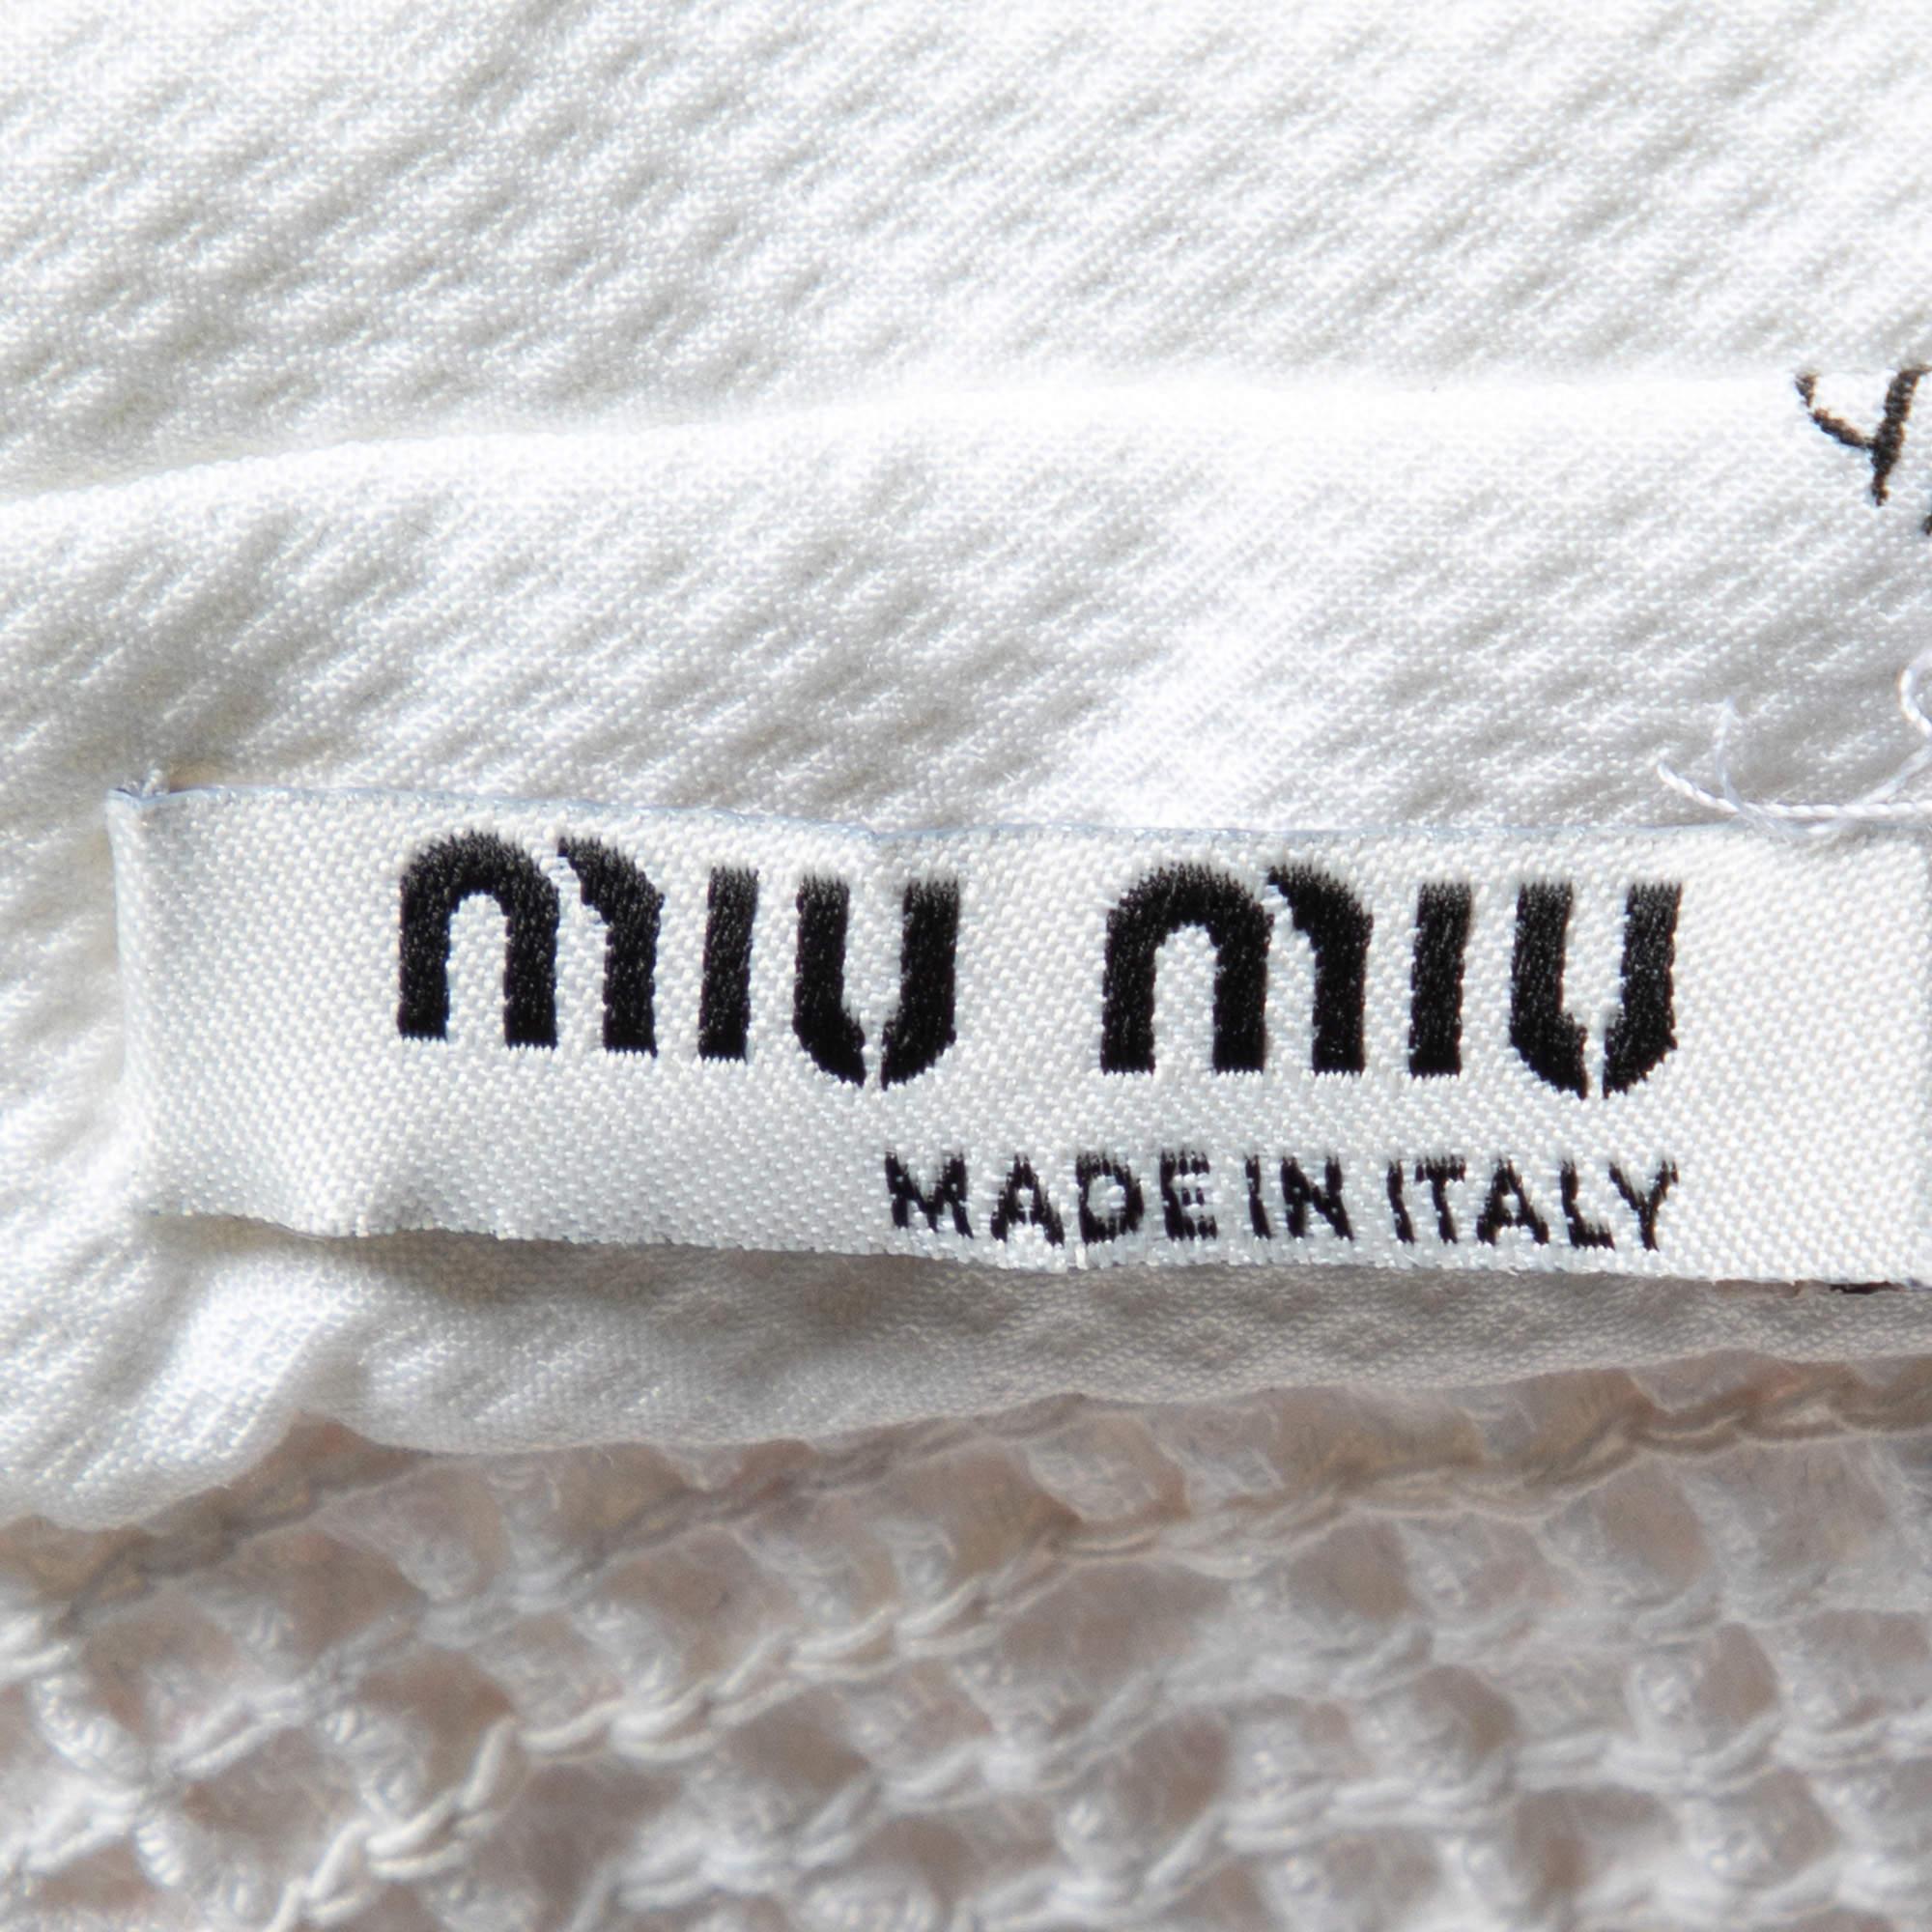 Miu Miu White Floral Print Cotton Smocked Top M In Excellent Condition For Sale In Dubai, Al Qouz 2